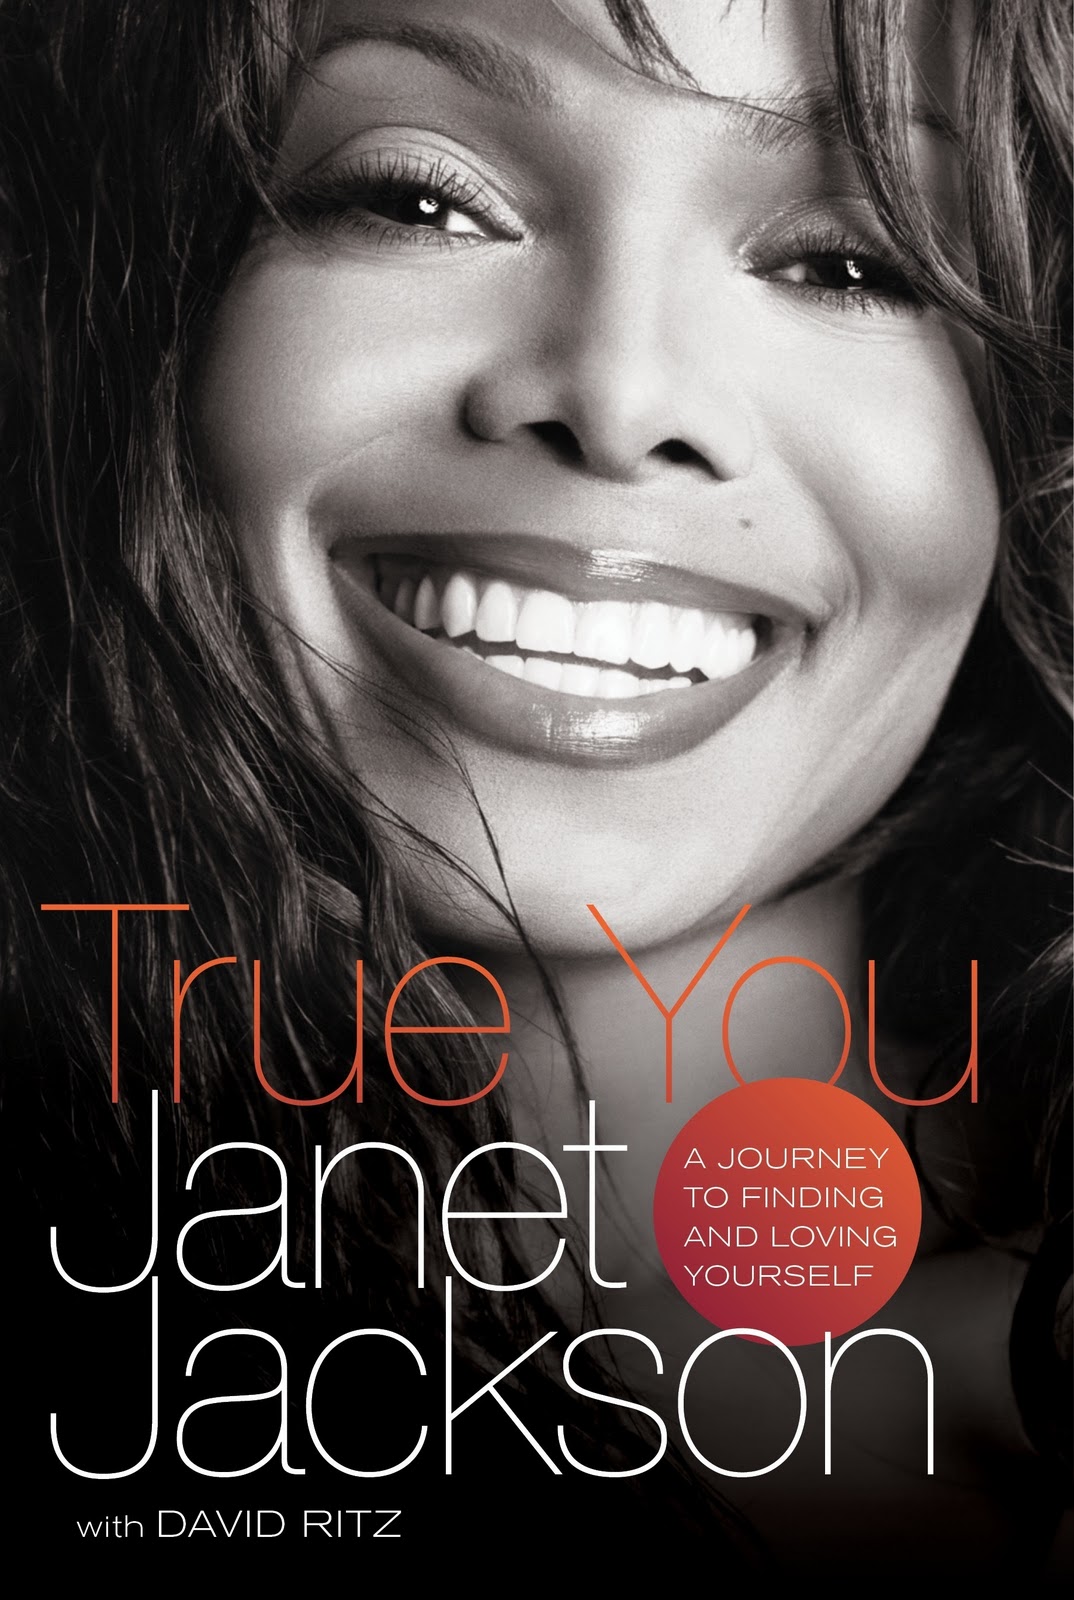 Janet+Jackson+True+You+Cover.jpg